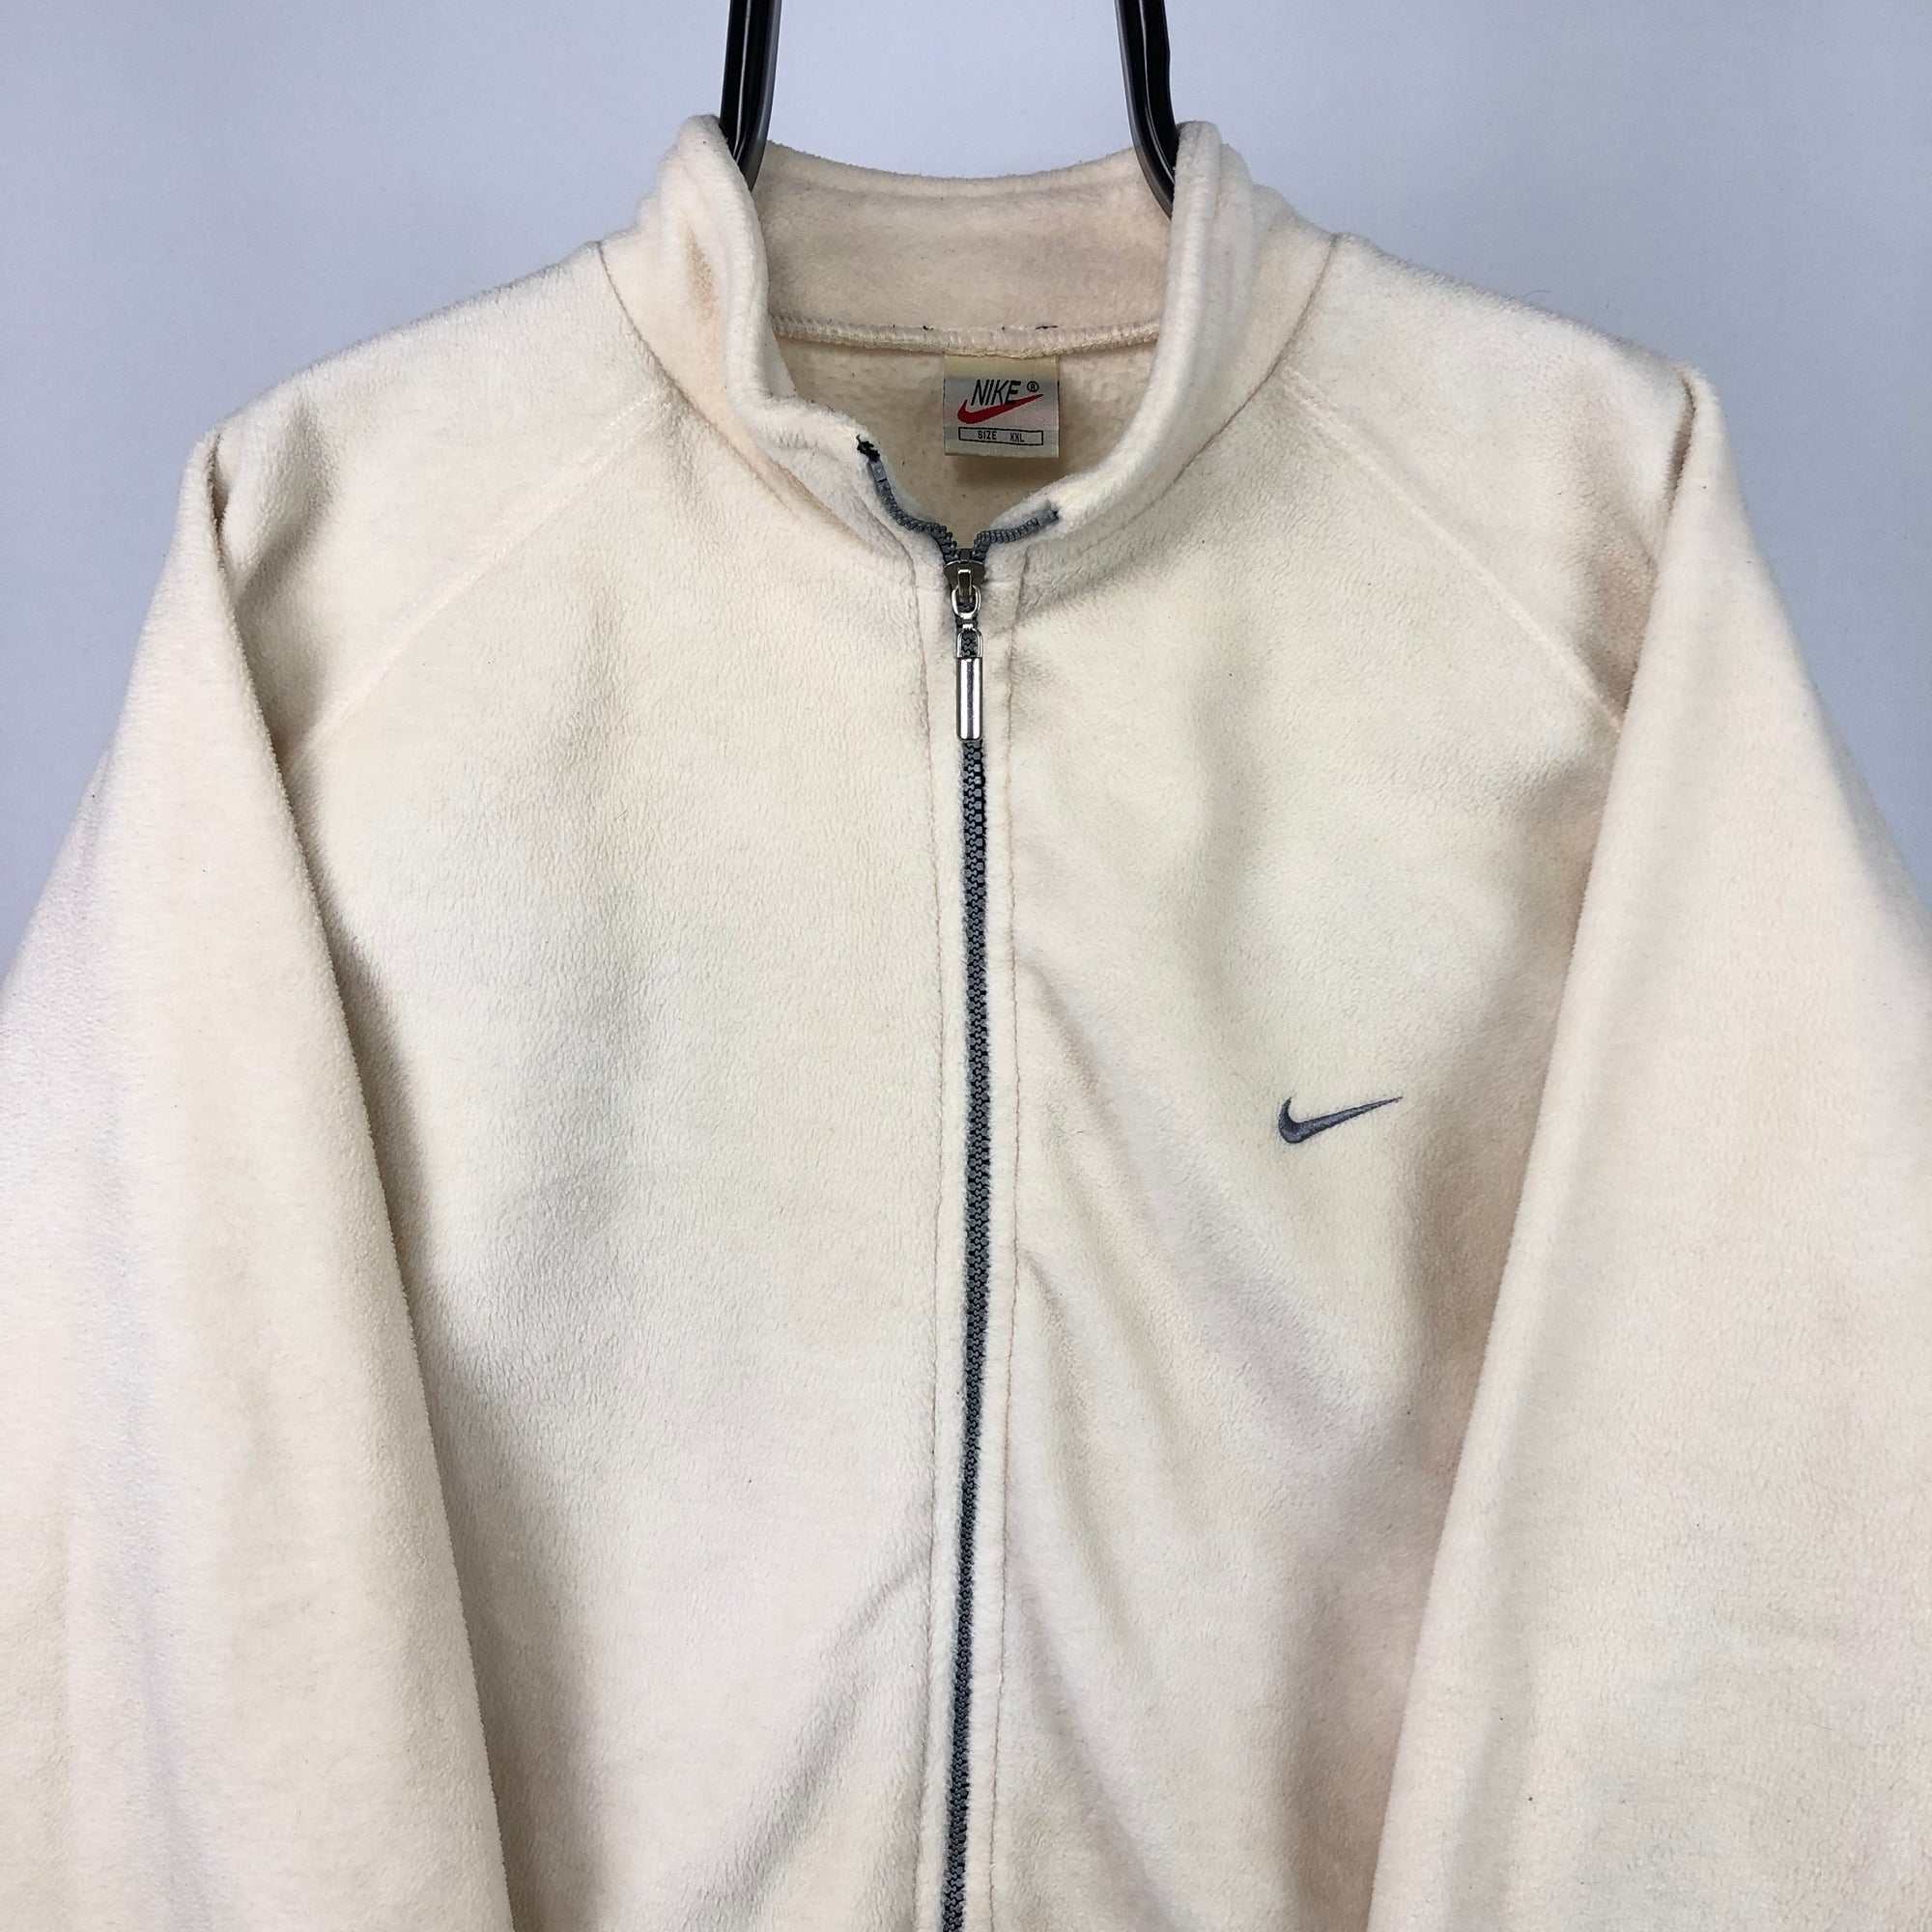 Vintage 90s Nike Fleece in Cream - Men's Medium/Women's Large